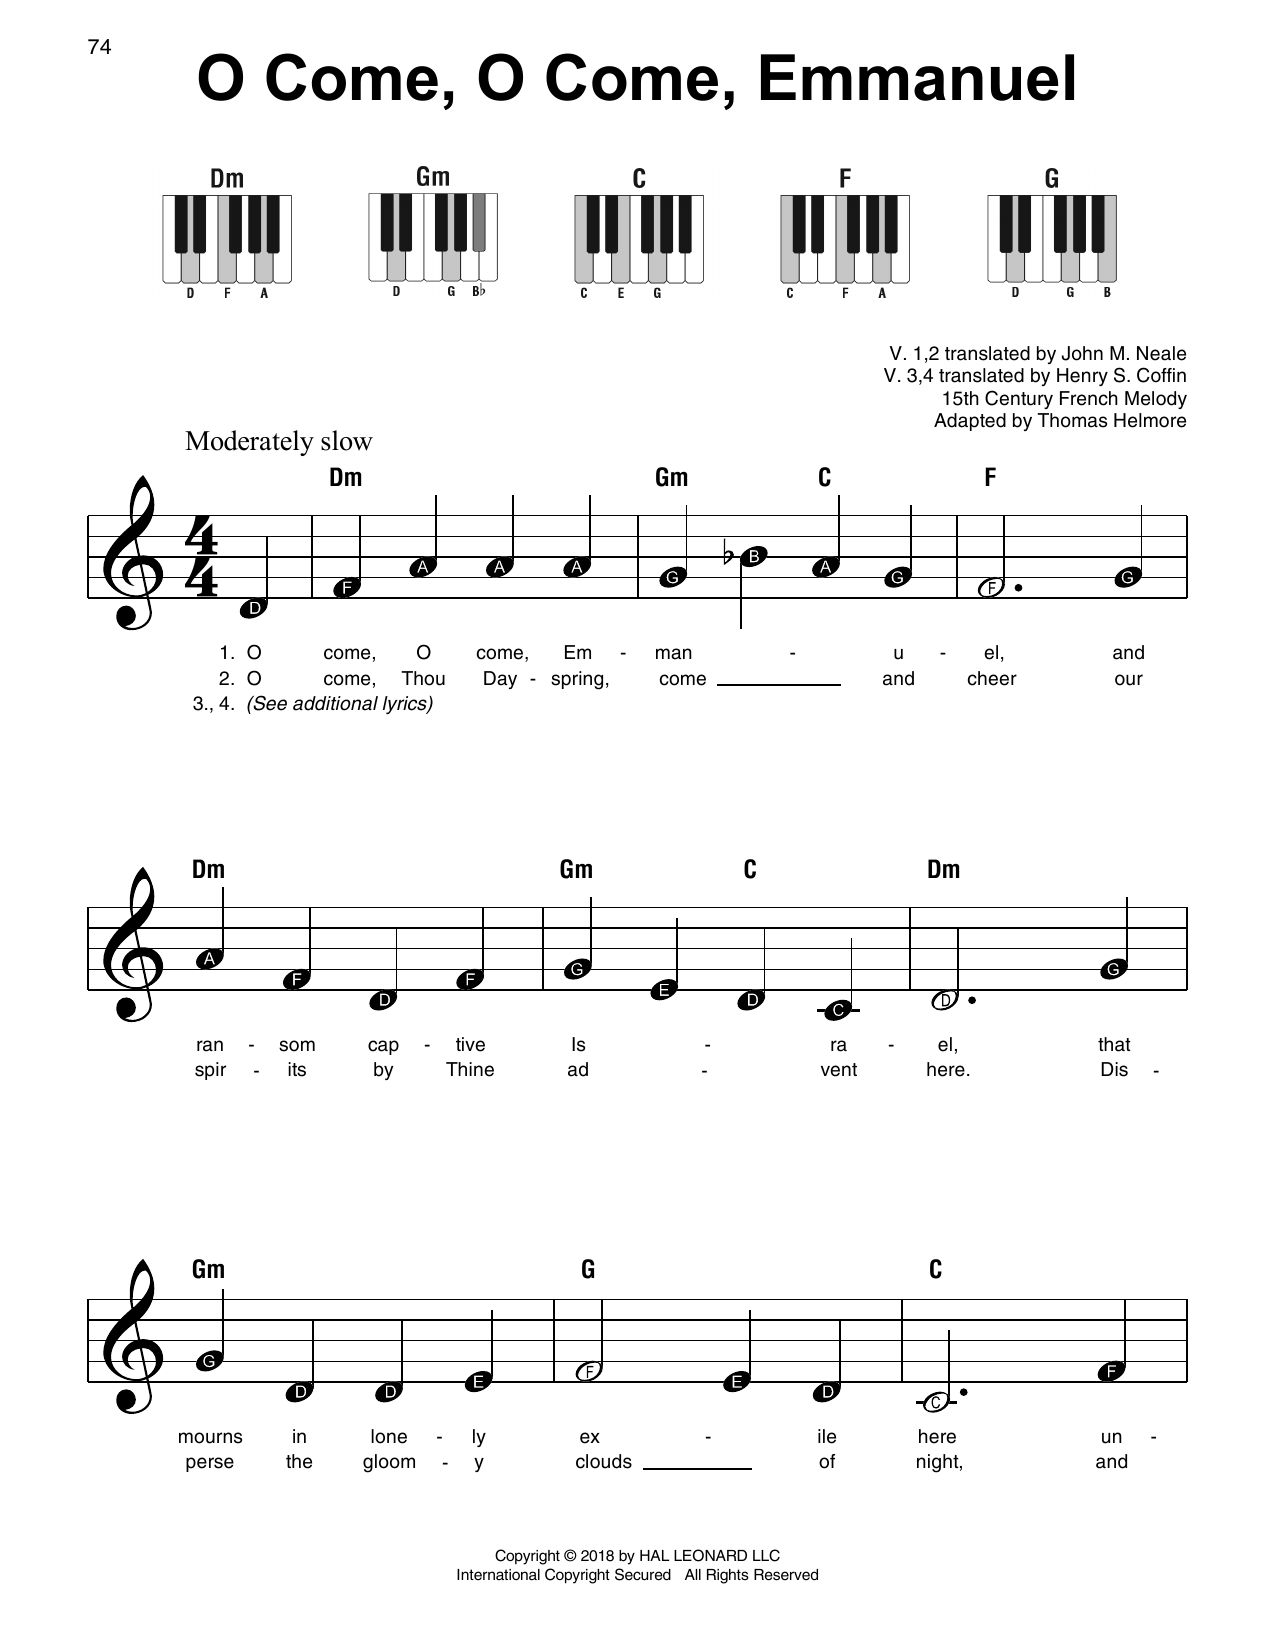 Christmas Carol O Come, O Come, Emmanuel sheet music notes and chords arranged for Super Easy Piano